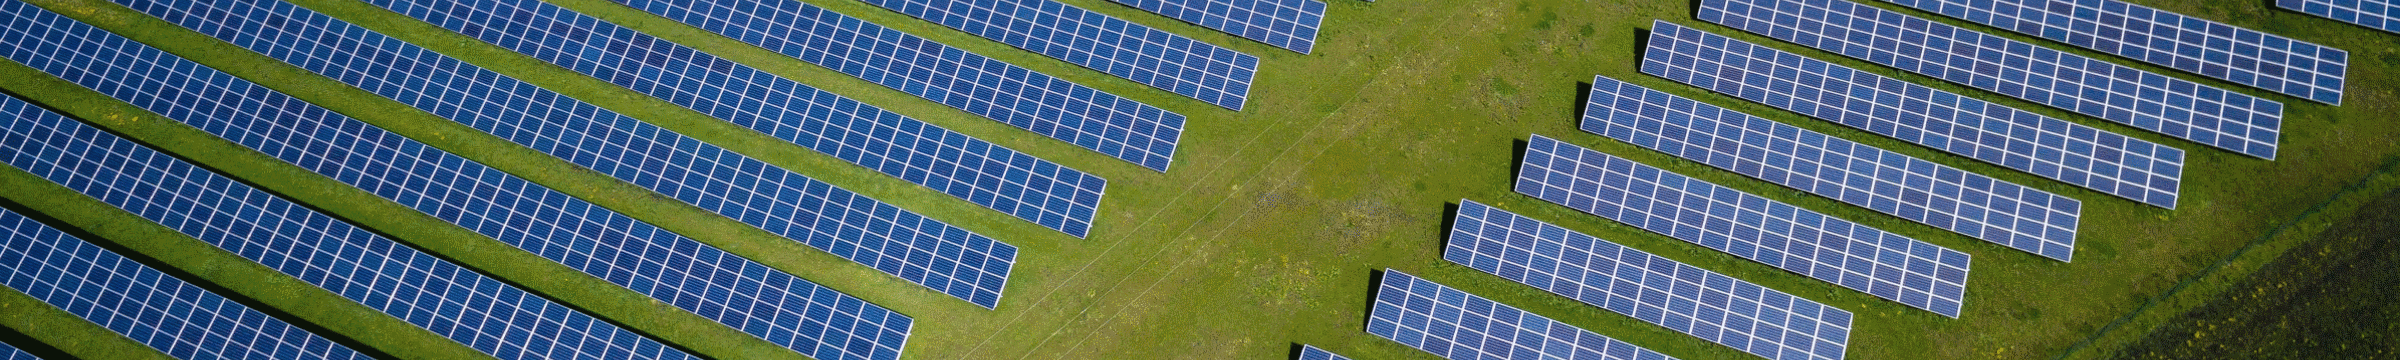 Rows of solar panels 